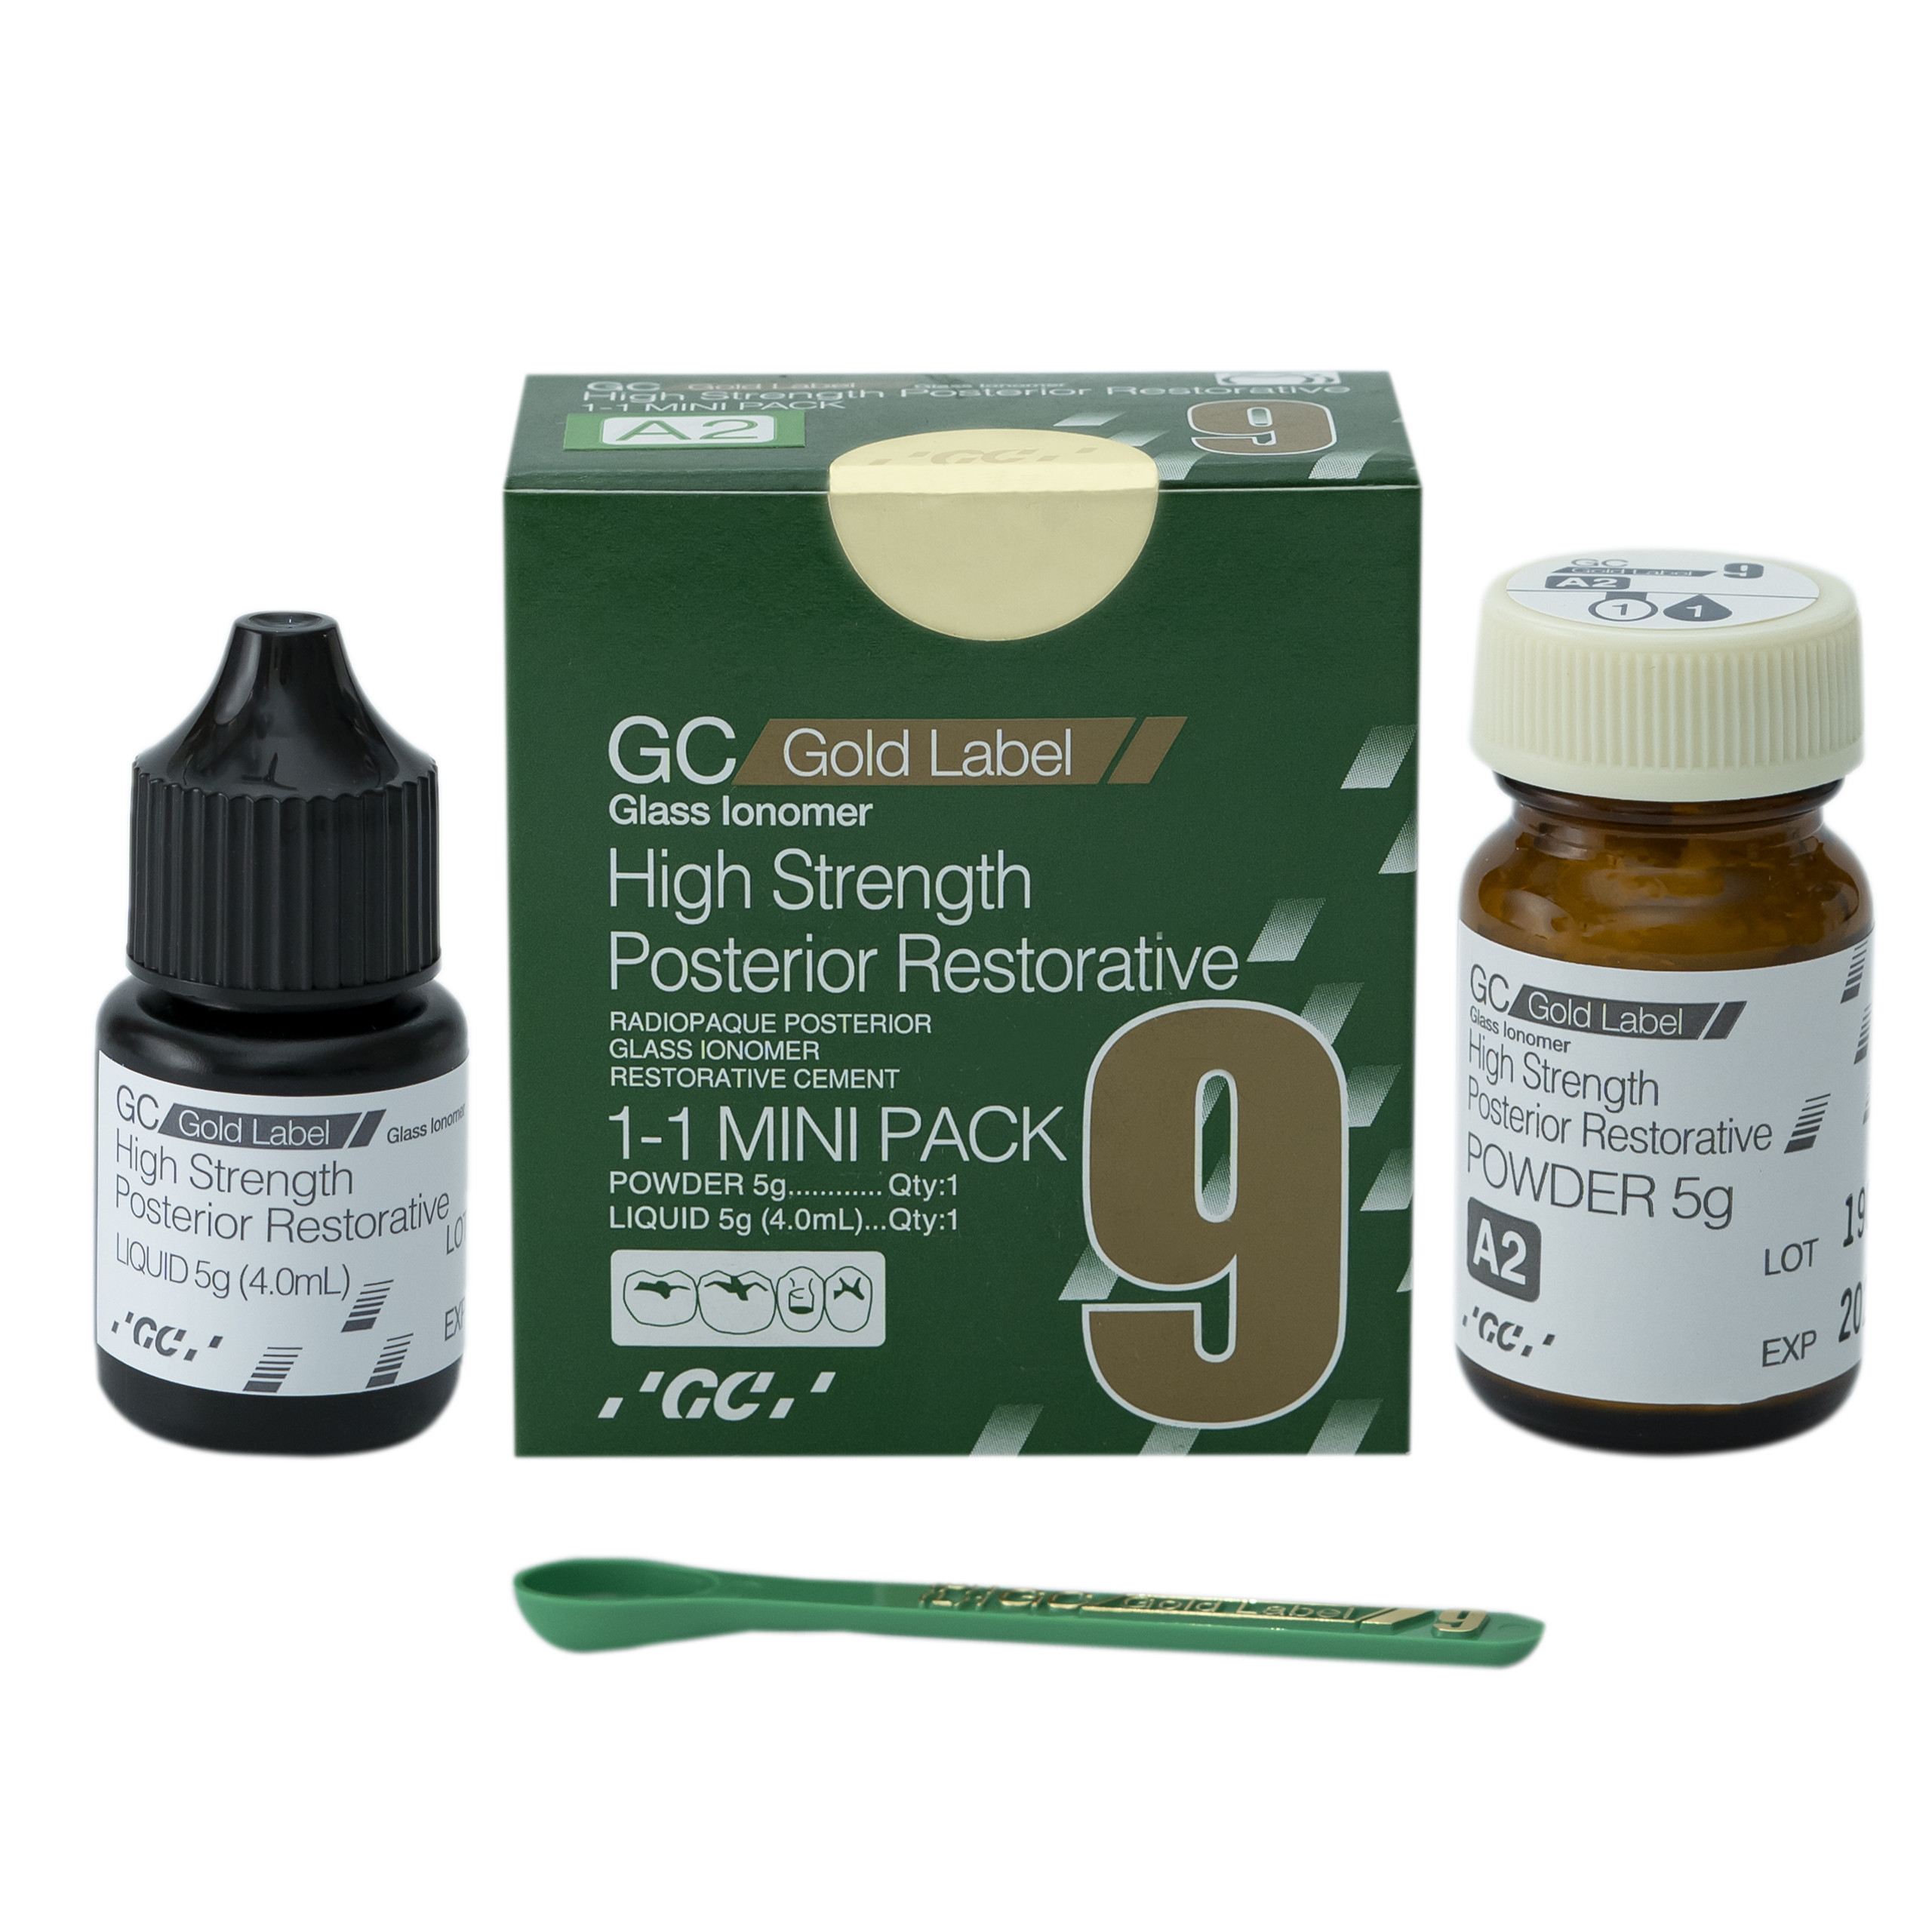 GC Gold Label Glass Ionomer High Strength Posterior Restorative Powder 5gm Liquid 5gm